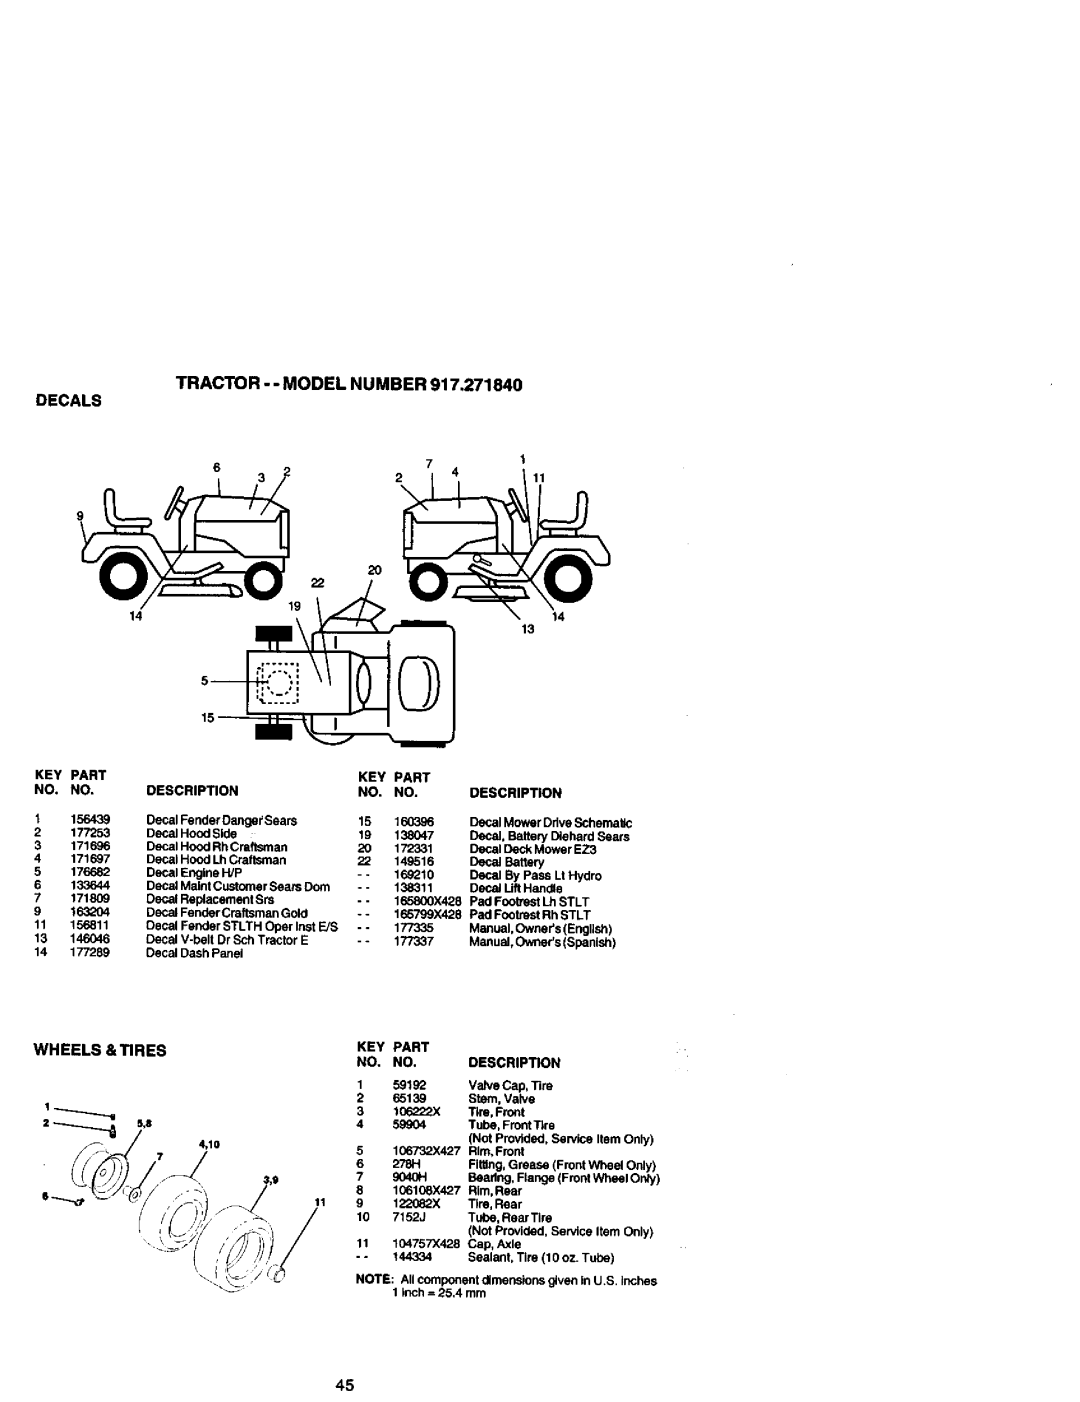 Craftsman 917.27184 owner manual Decals, Tractor - - Model Number, 59192 